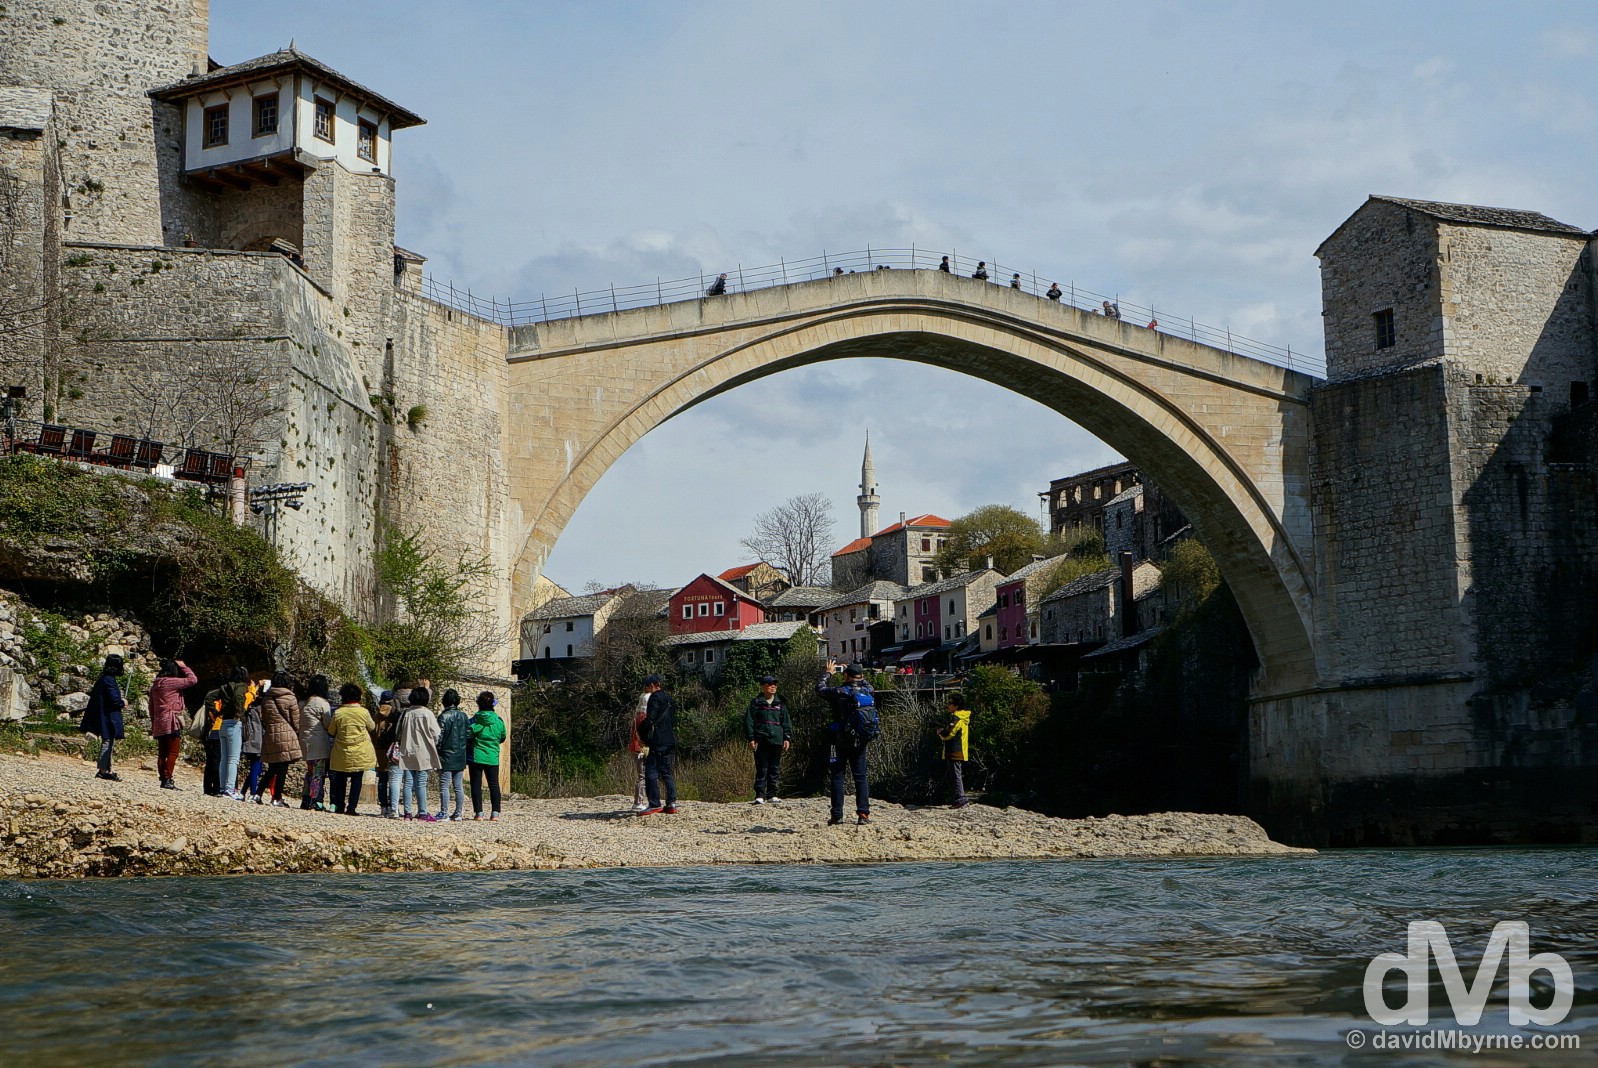 The iconic Stari Most (Old Bridge) over the Neretva River in Mostar, Bosnia & Herzegovina. April 6, 2015.